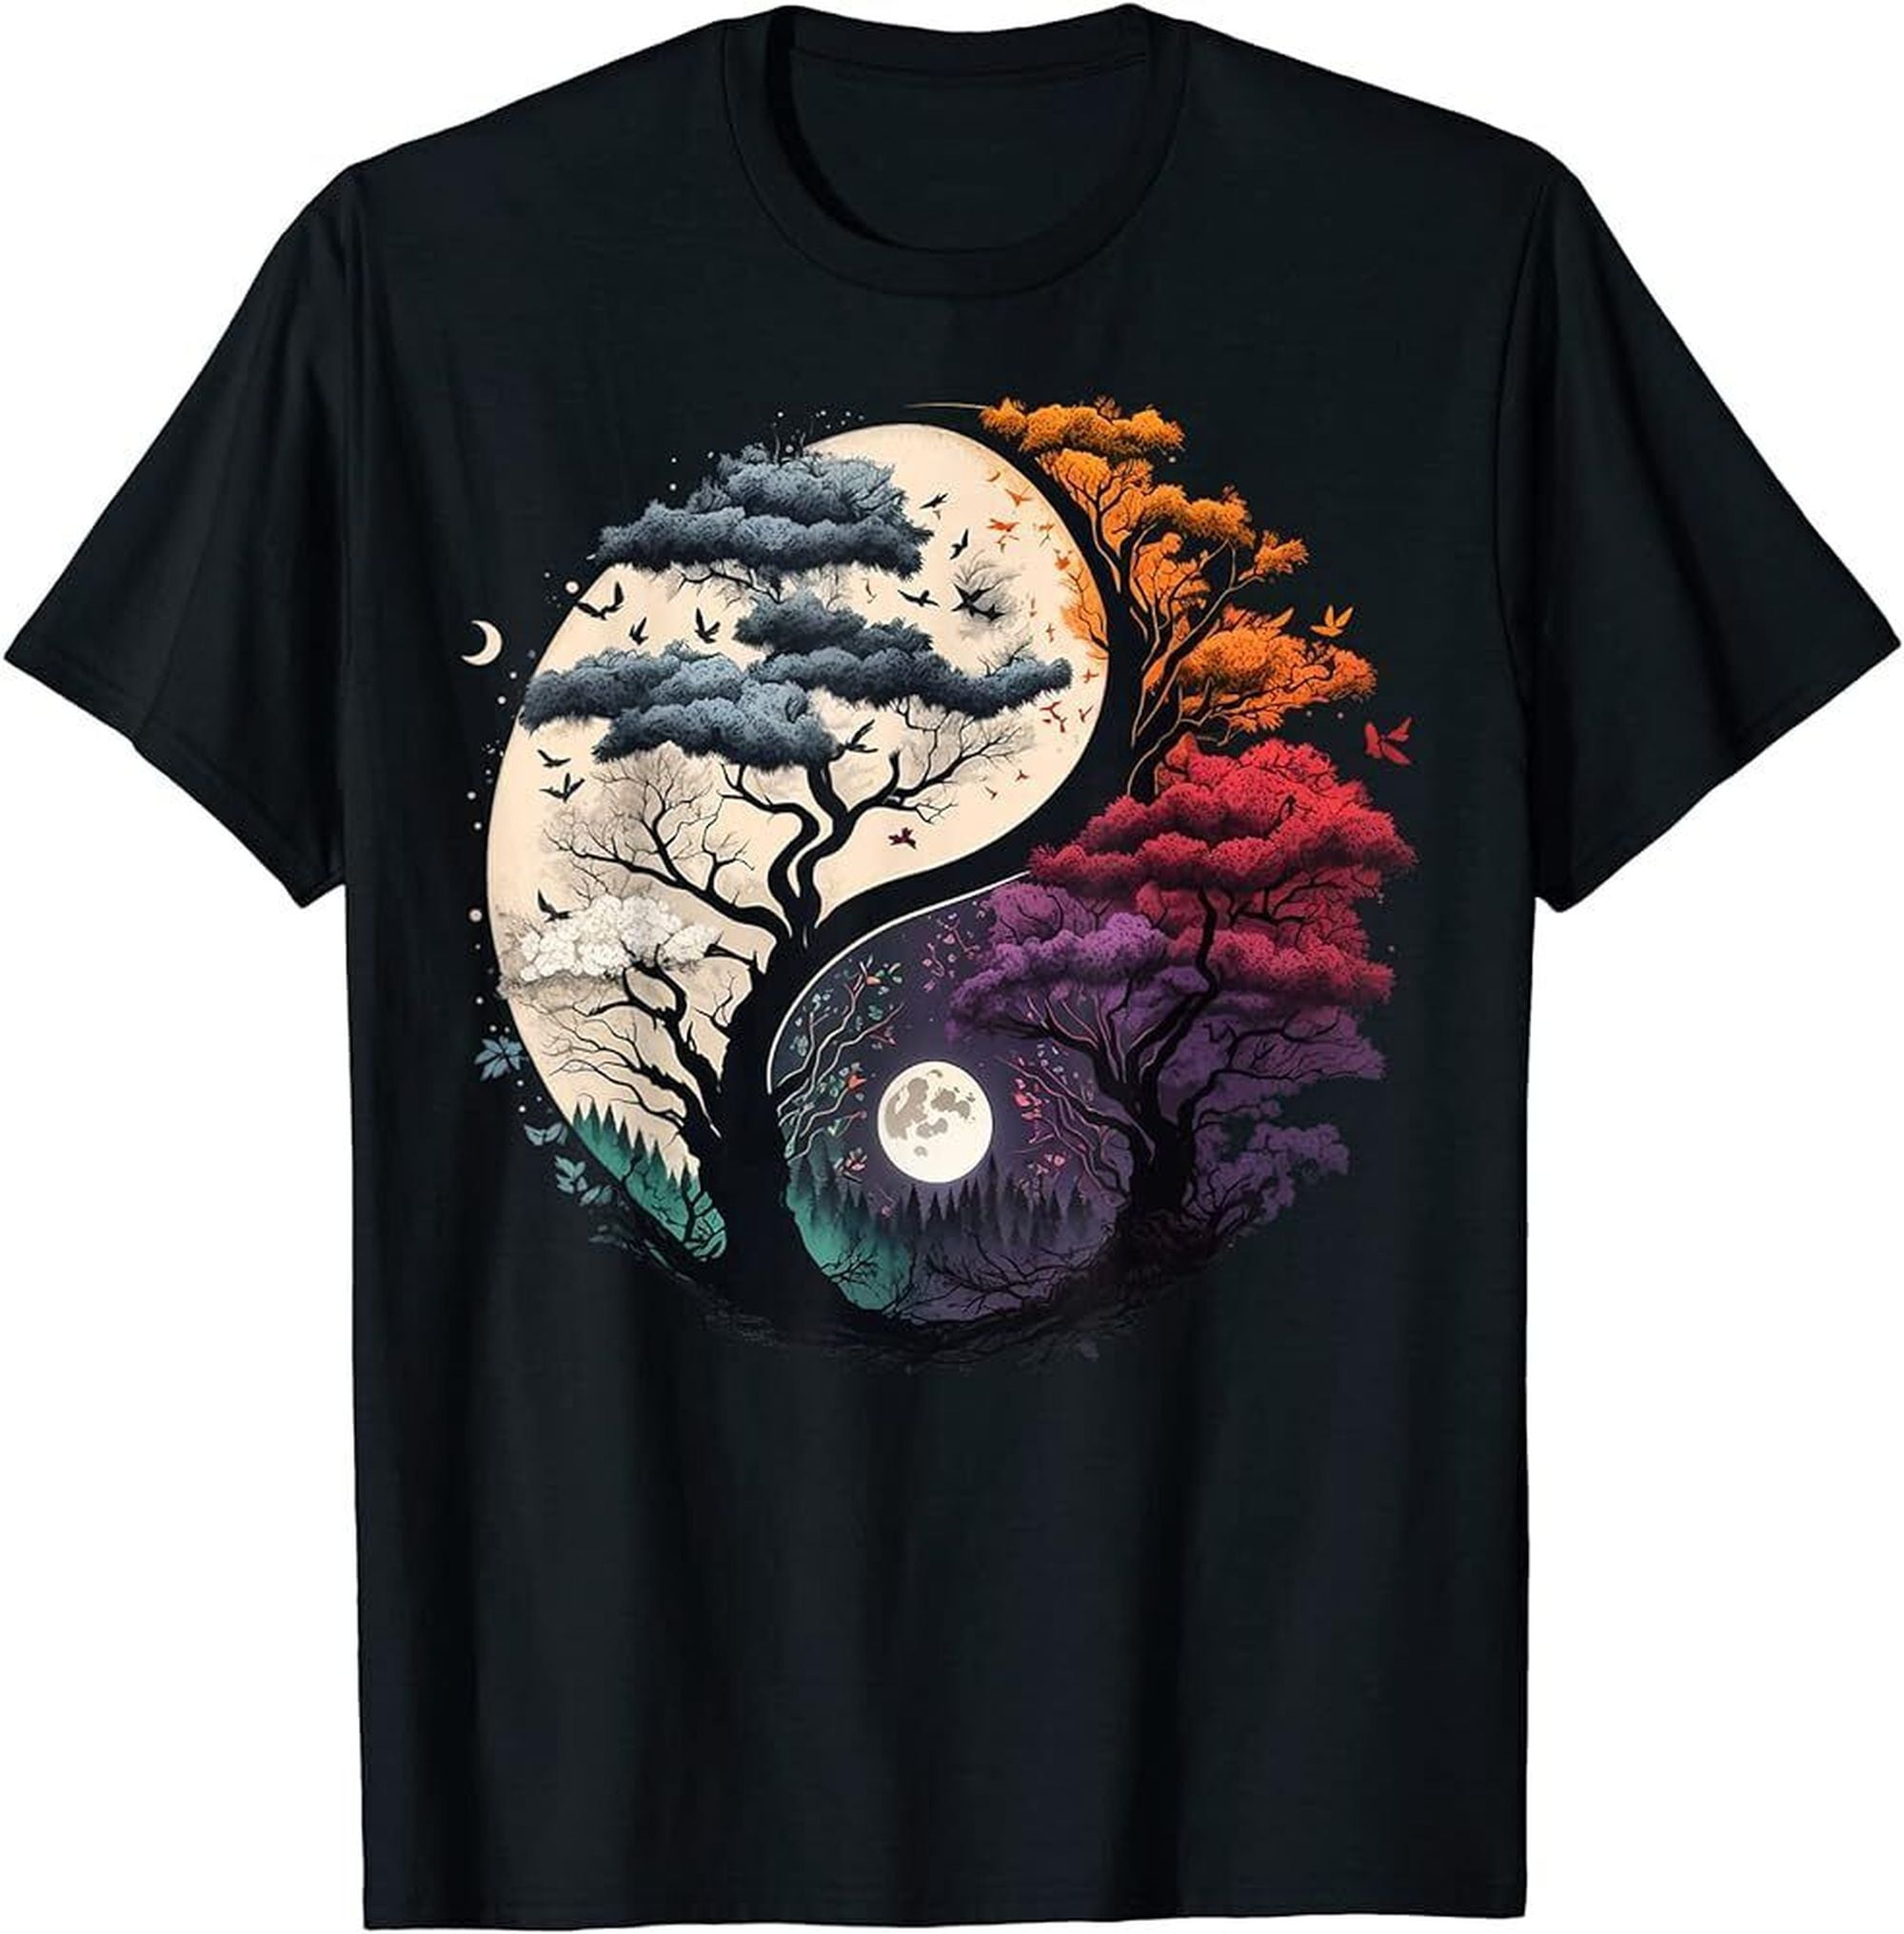 Nature's Equilibrium: Tree of Life and Yin Yang Harmony T-Shirt ...